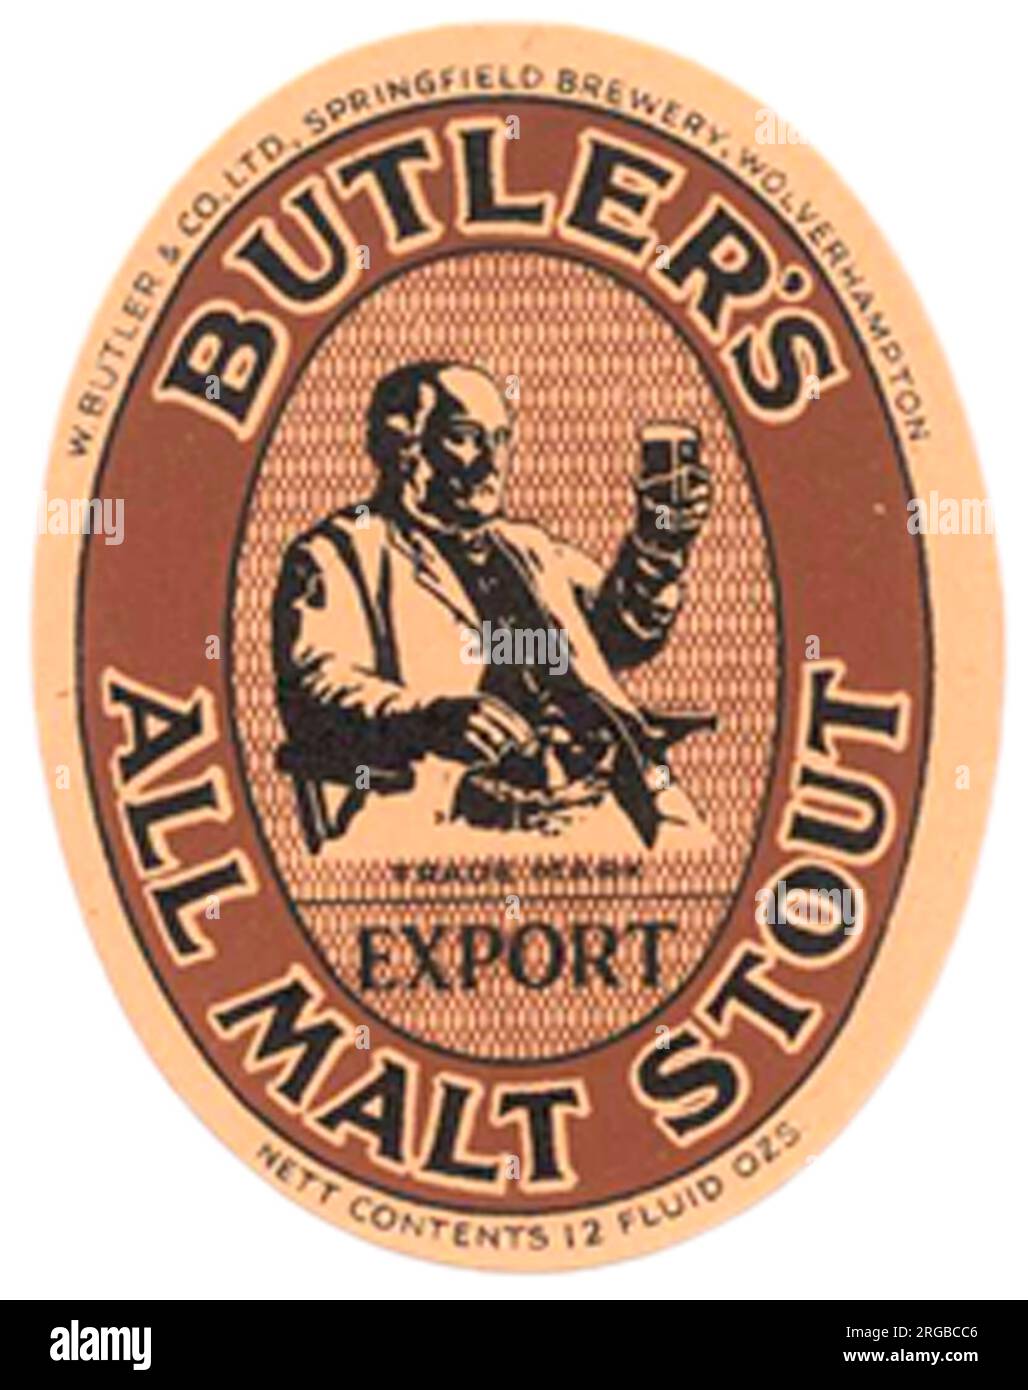 Butler's All Malt Stout Stock Photo